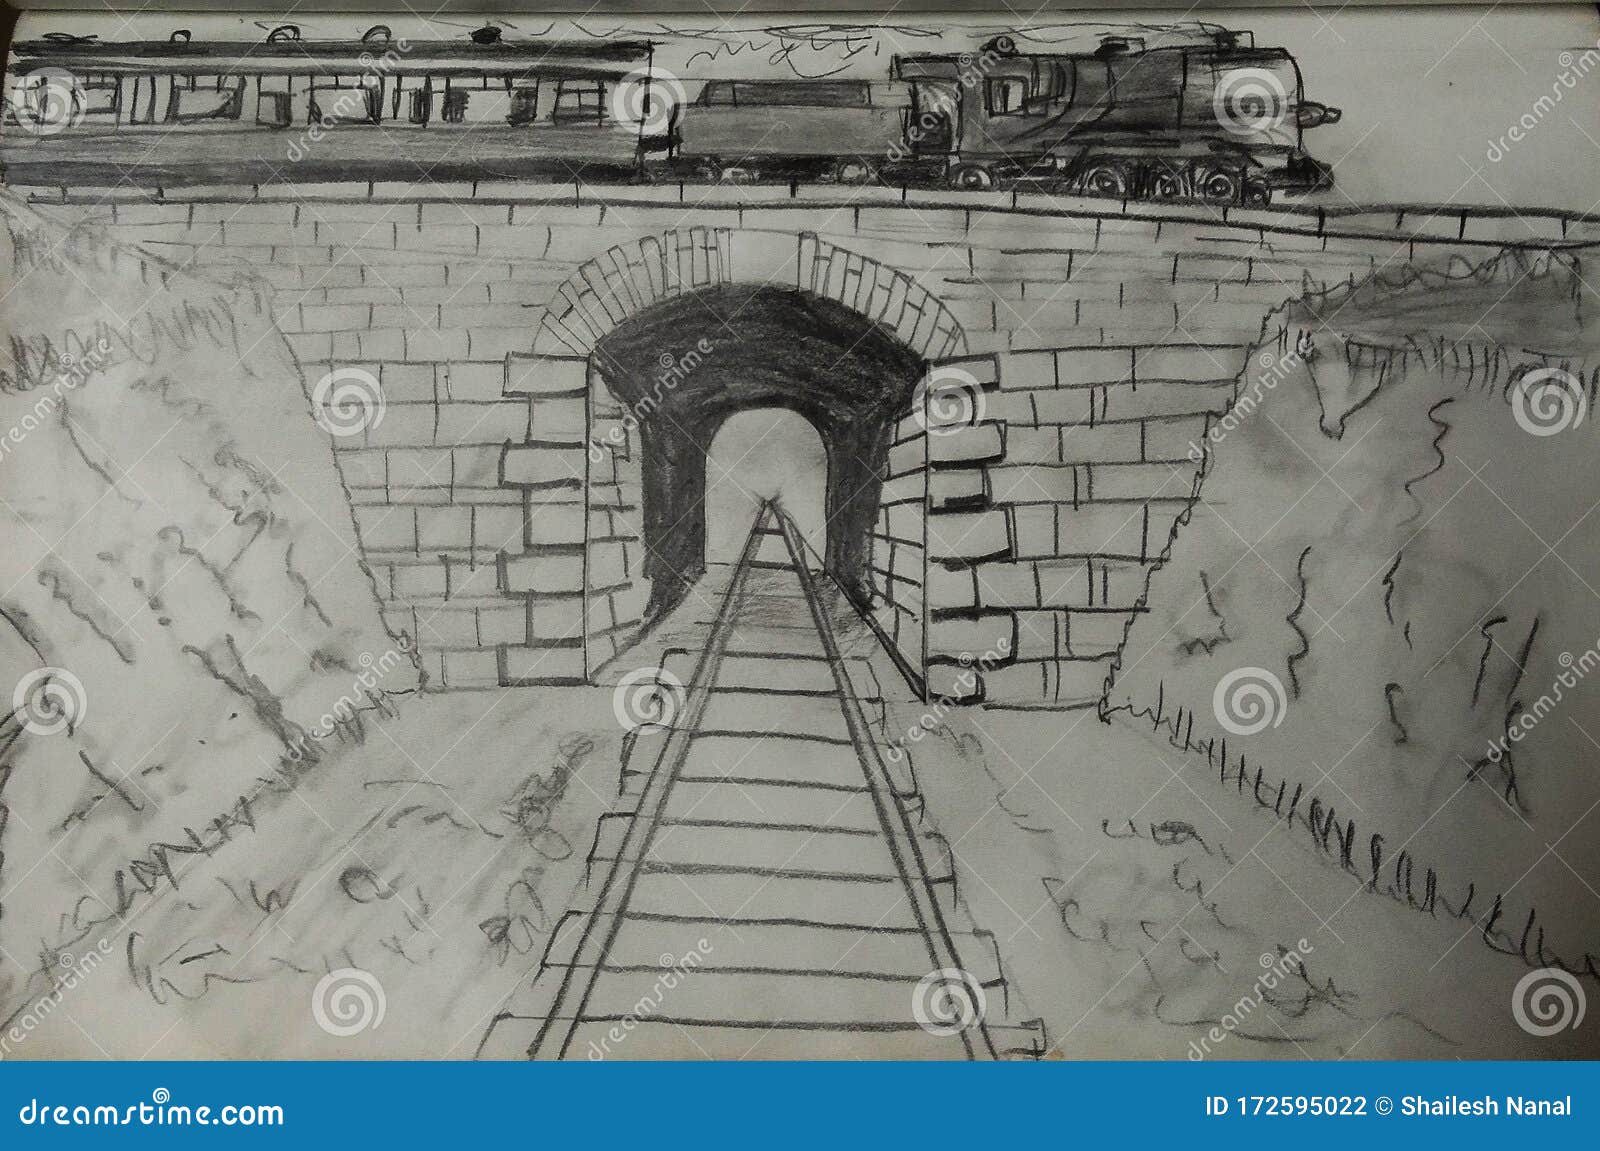 Original Drawing of Aerial view of Verrazano Narrows Bridge